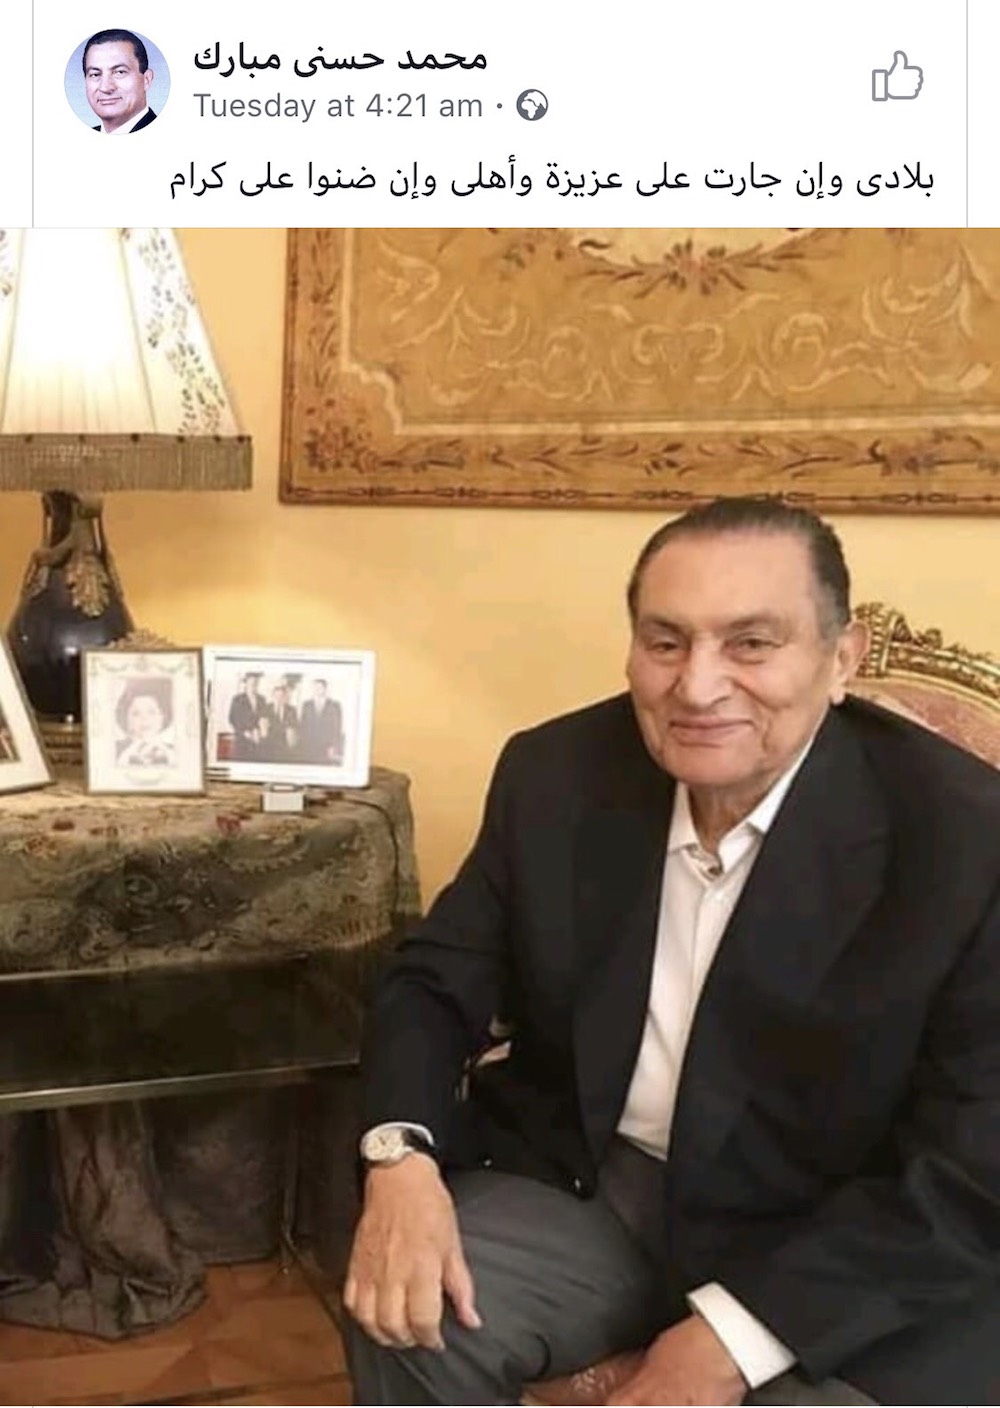 Husni mubarak